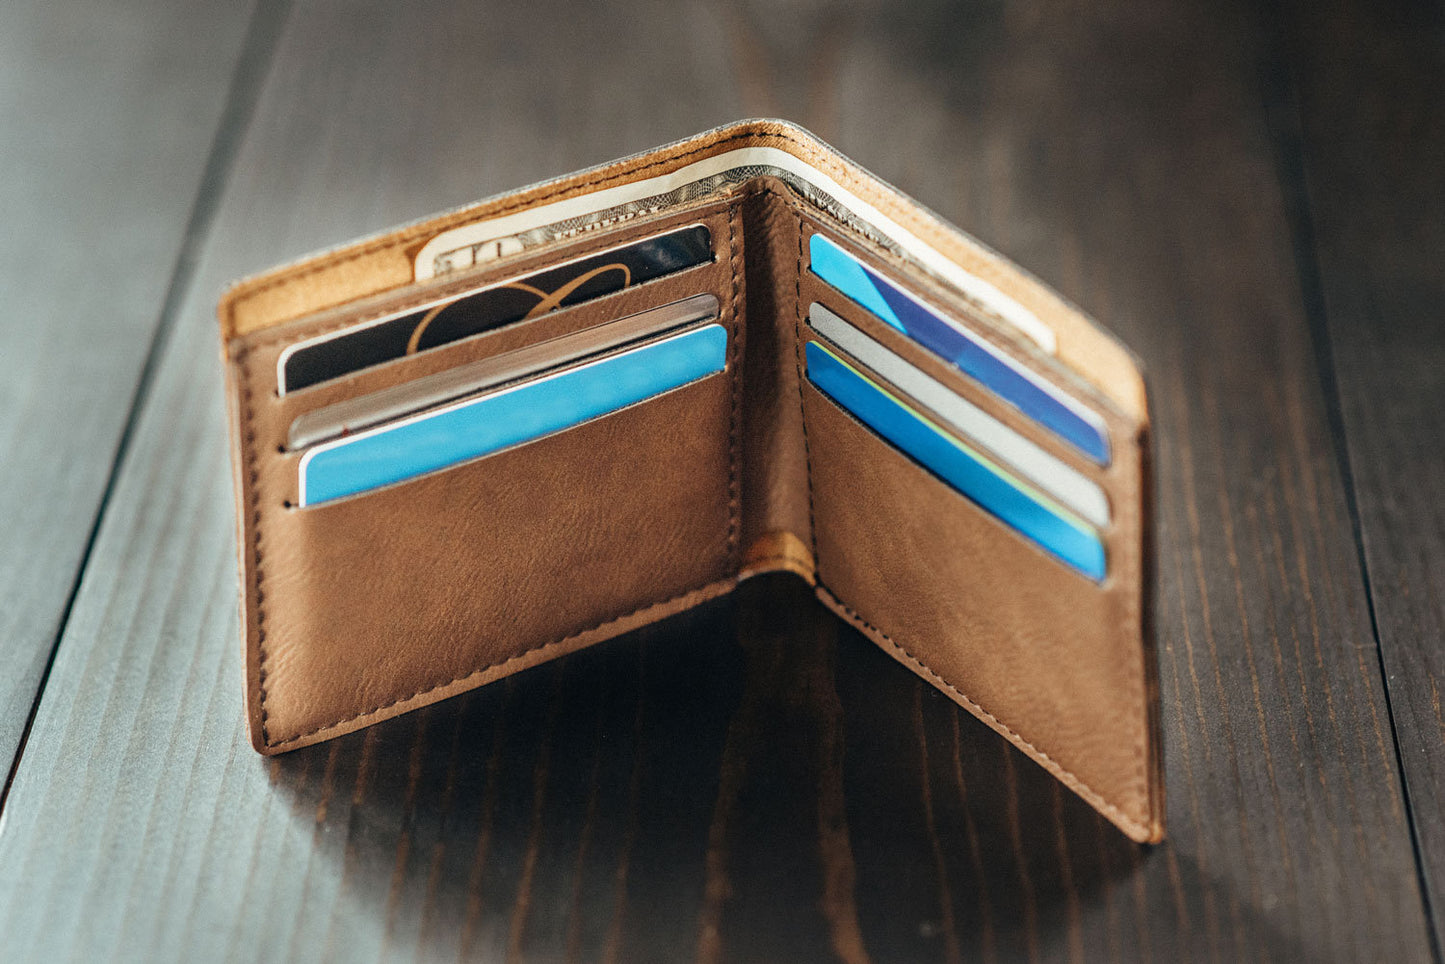 Personalized Wallet - Groomsmen Gift